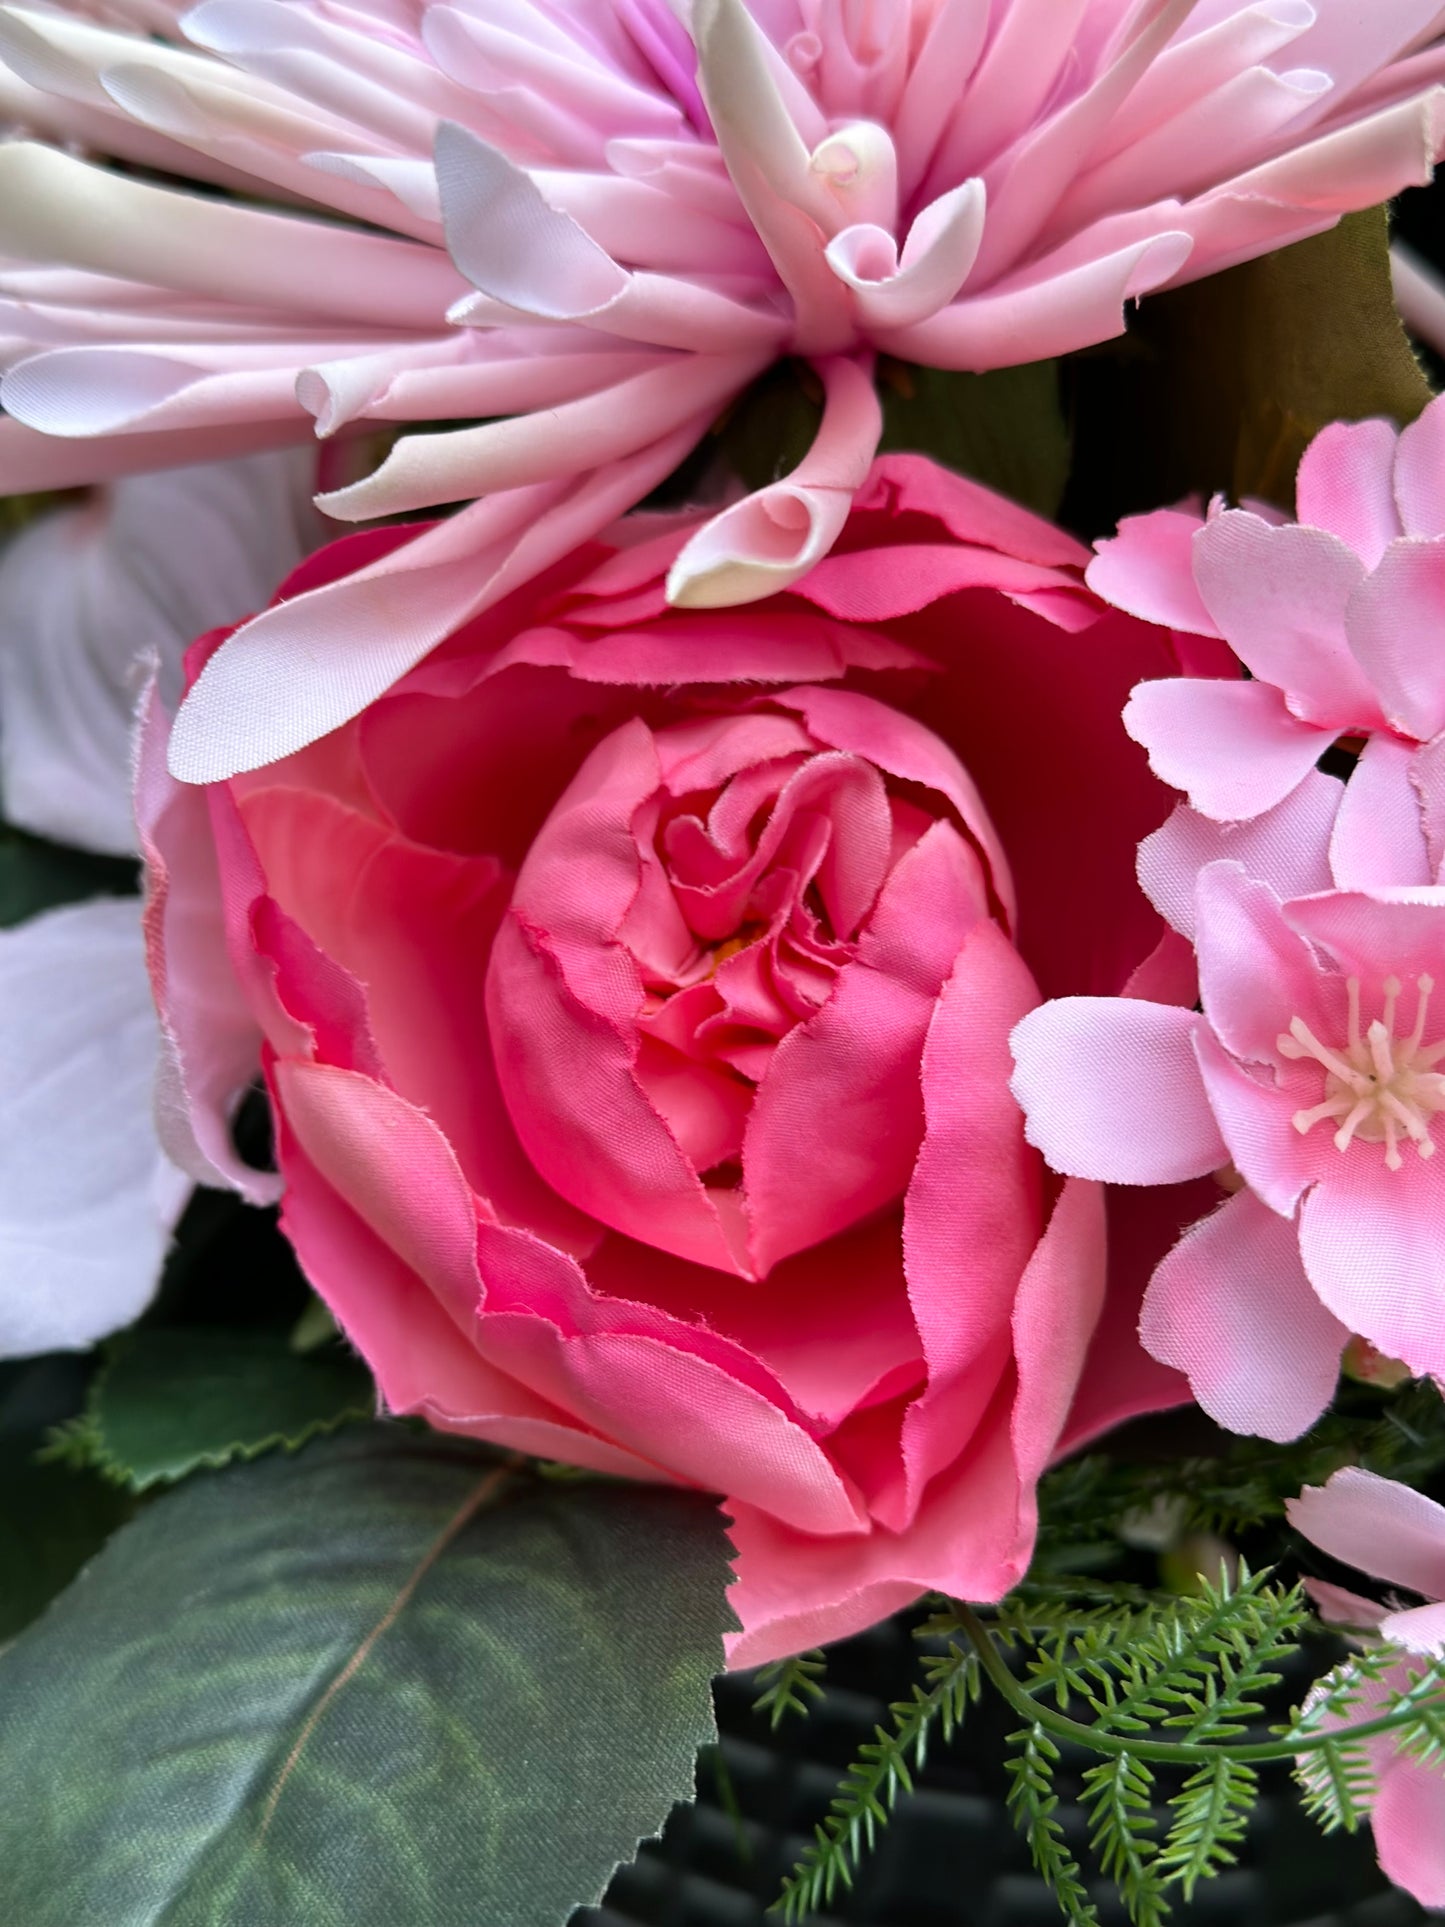 The Raspberry Sorbet Floral Arrangement